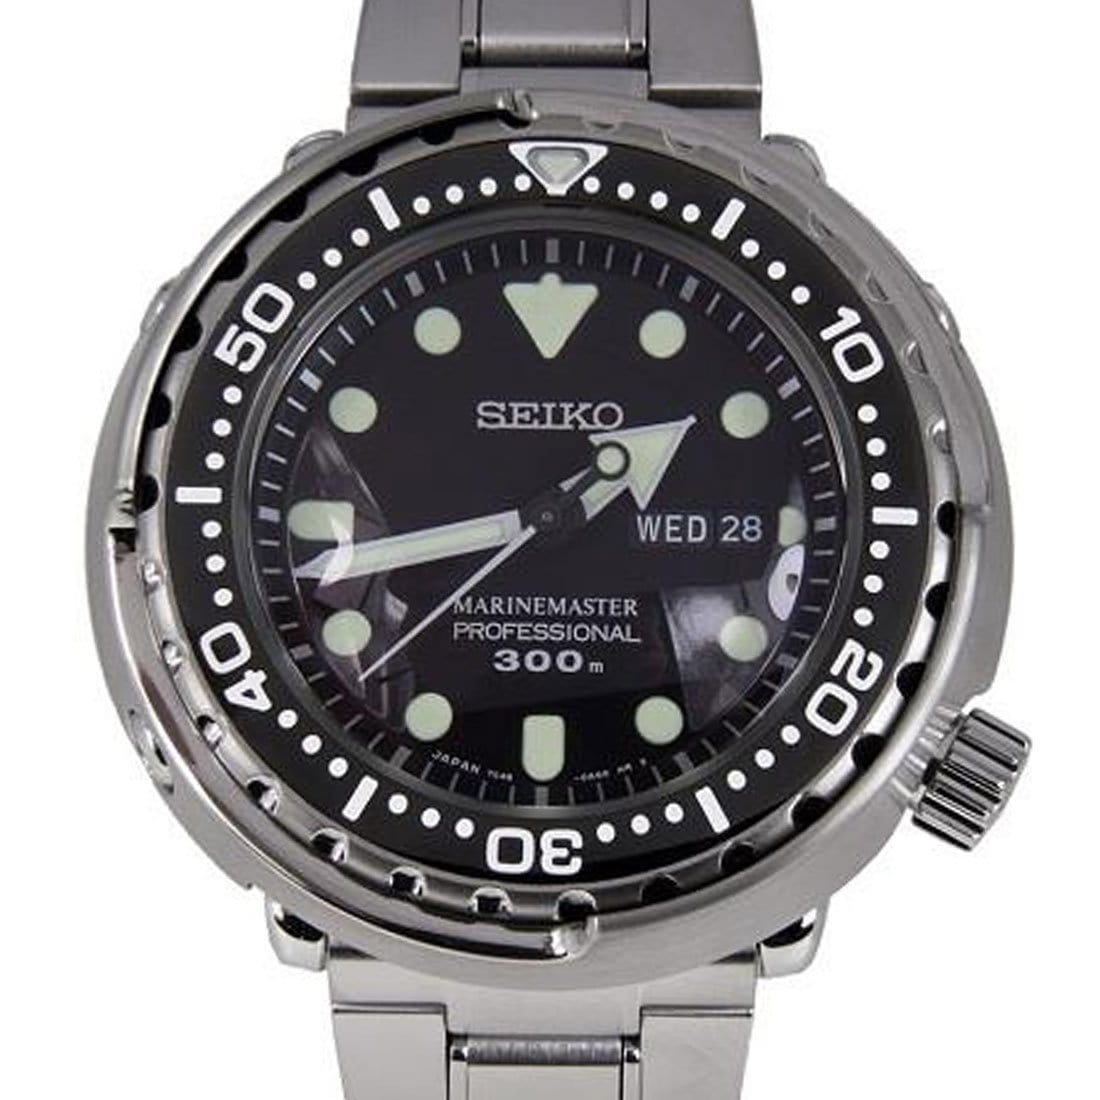 SBBN031 Seiko PROSPEX Marine Master Professional WR300M JDM Watch